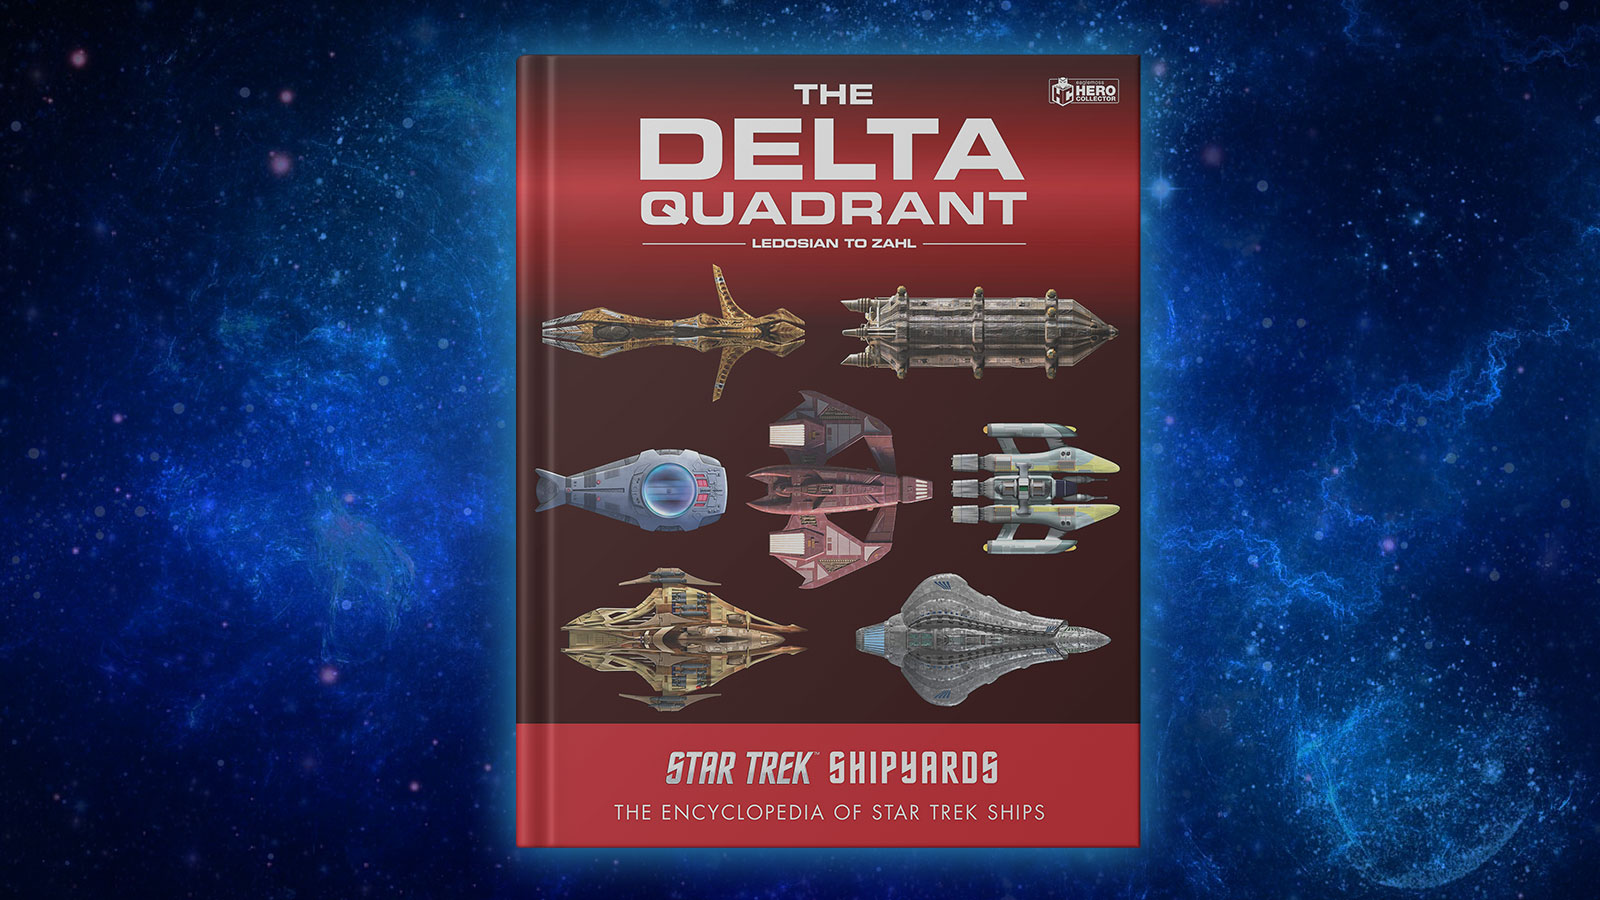 Star Trek Shipyards: The Borg And The Delta Quadrant Review